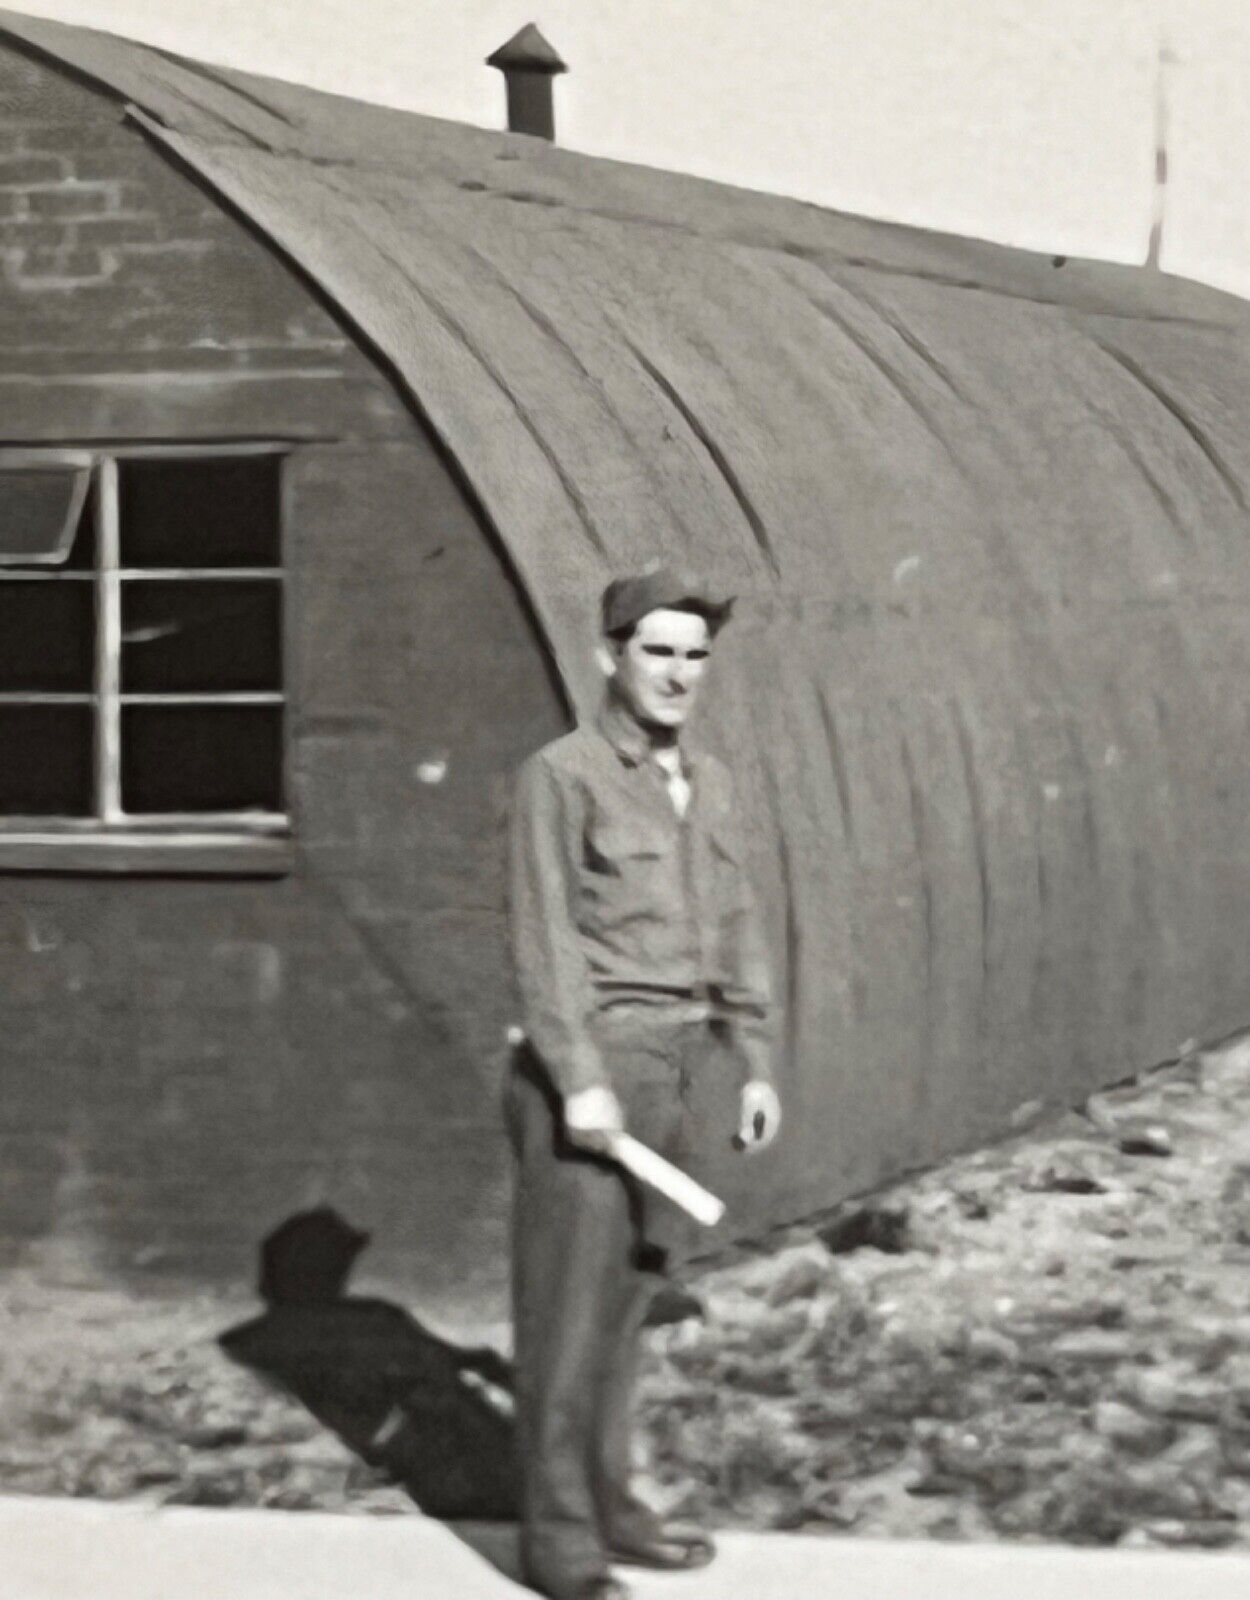 WWII US Military Man Robert O’Carroll Vintage Snapshot Photograph 2.5 x 2